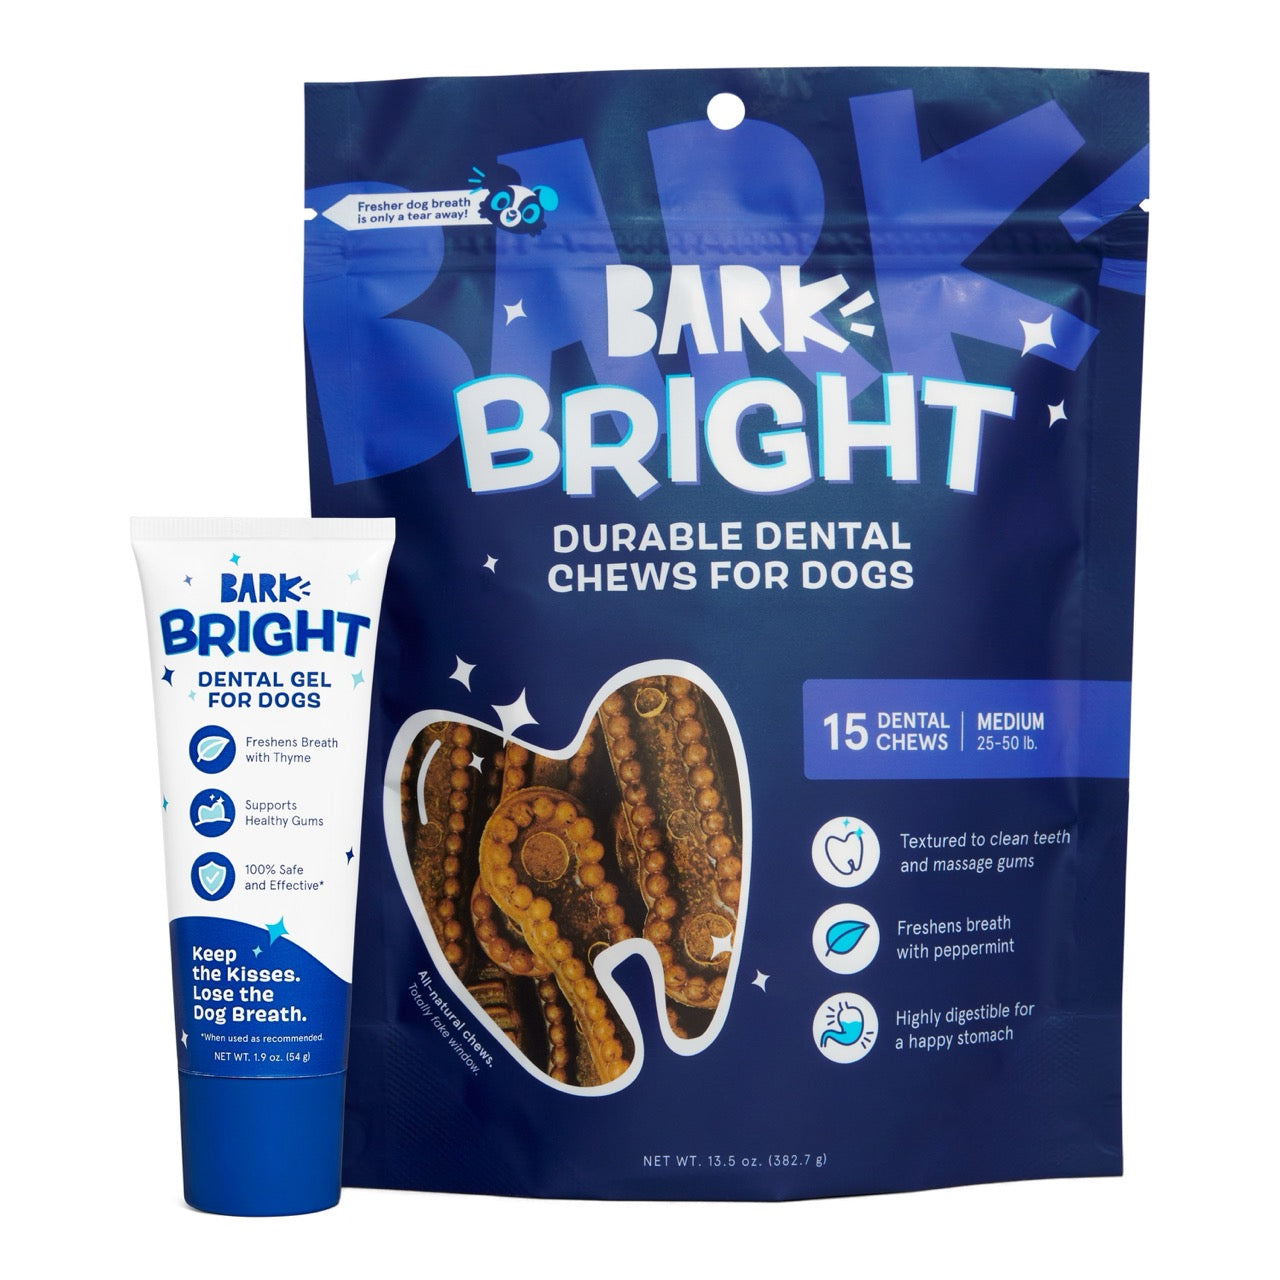 The Bright Durable Dental Kit